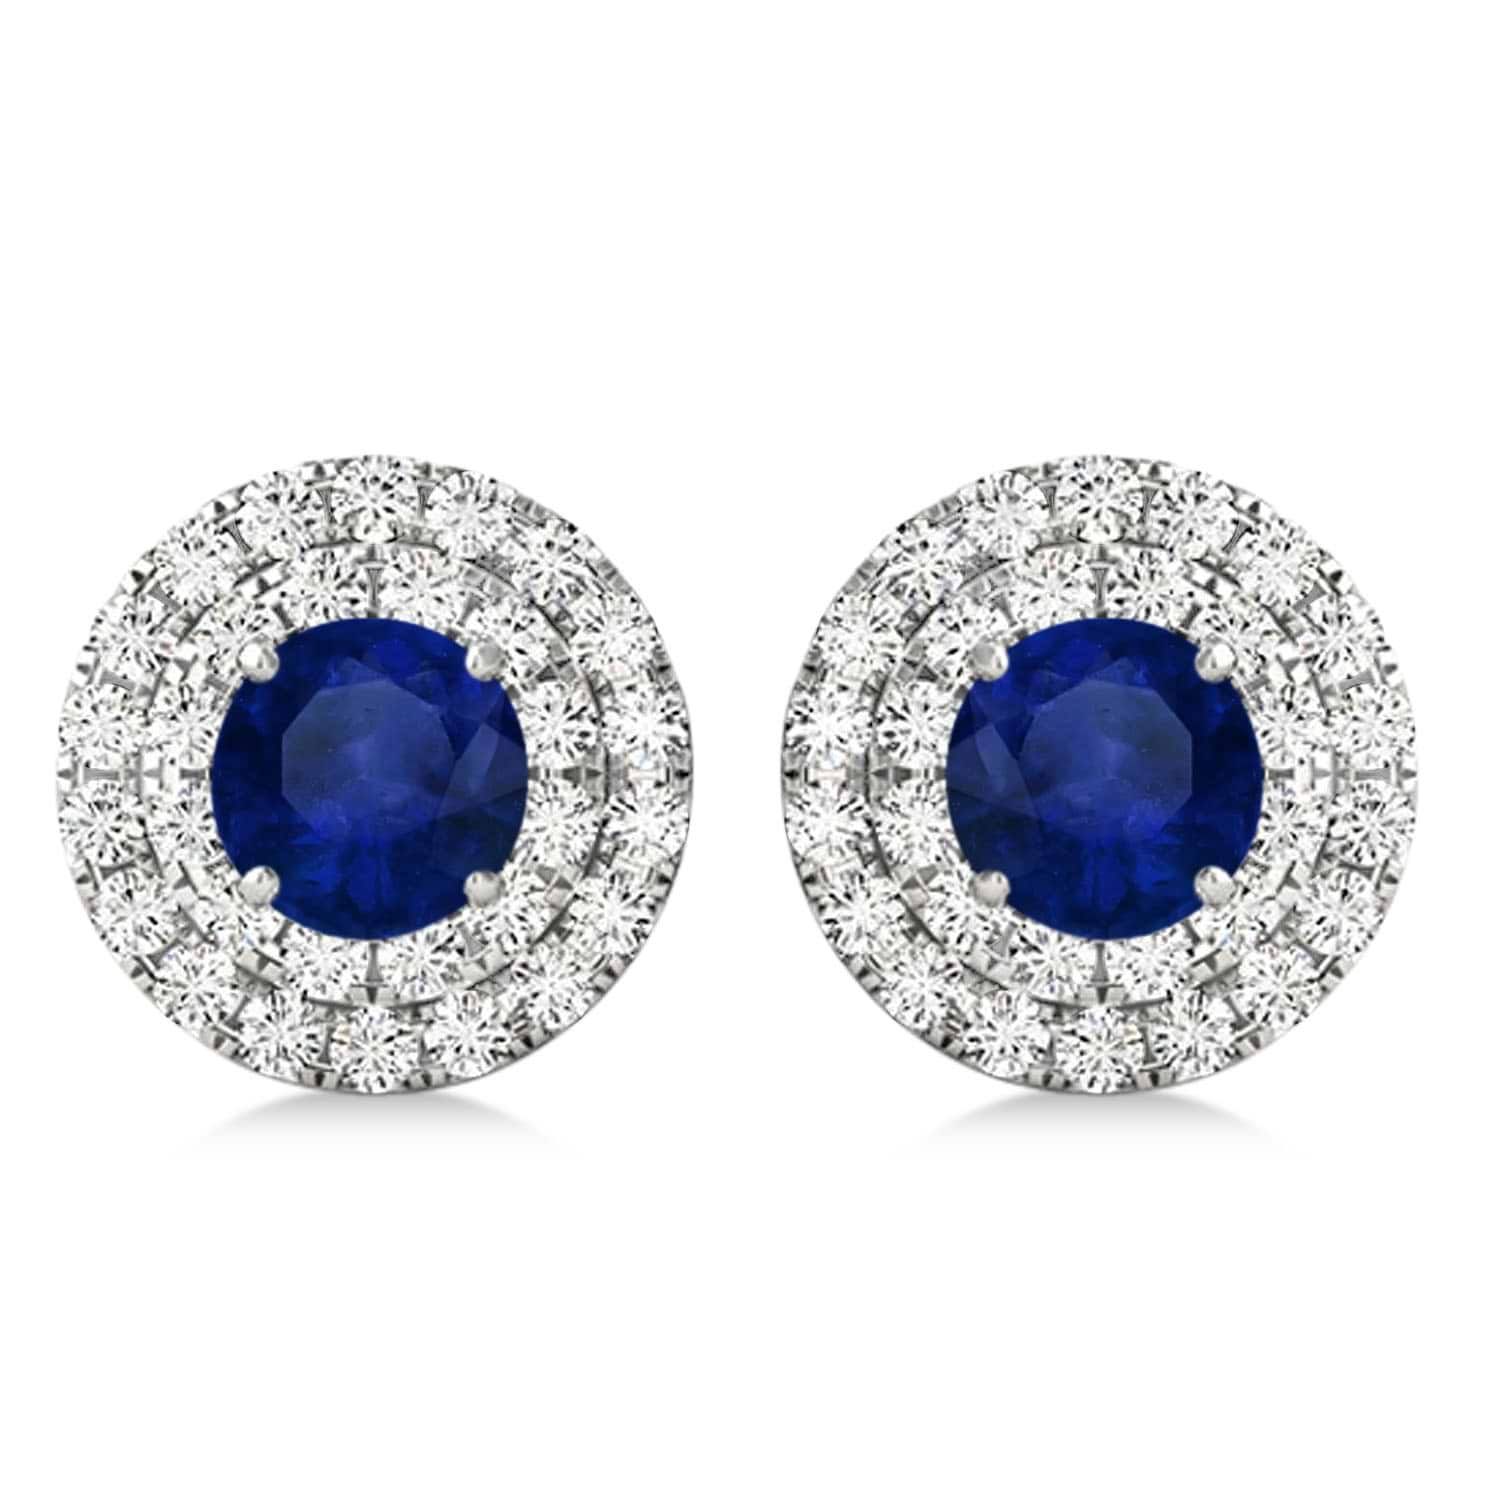 Round Double Halo Diamond & Blue Sapphire Earrings 14k White Gold 1.65ct